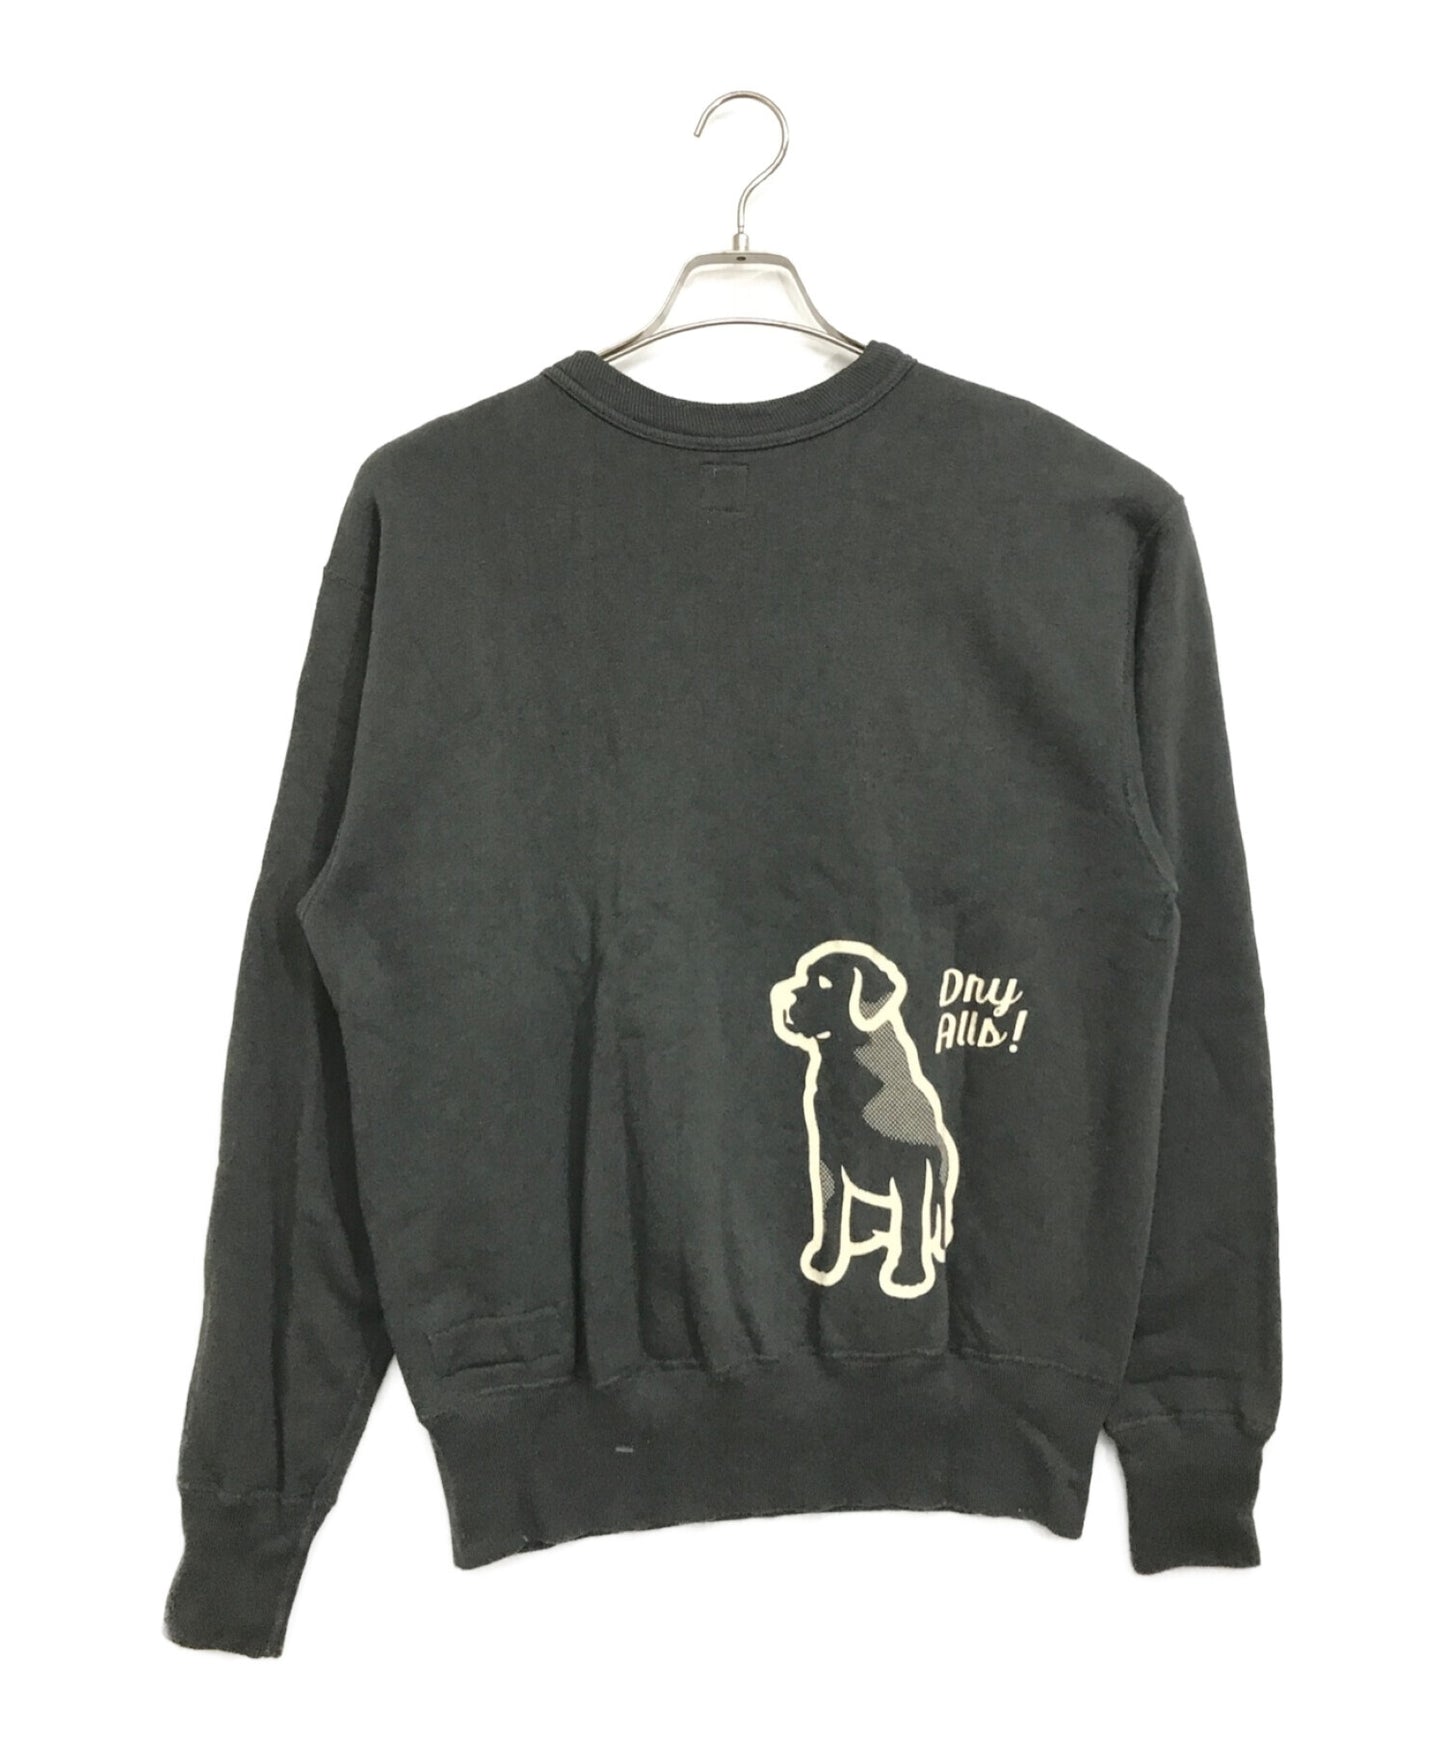 Human Made Dog Crewneck Sweatshirt / Dog Crew Neck Sweatshirt / Dry Alls / Rib / Print